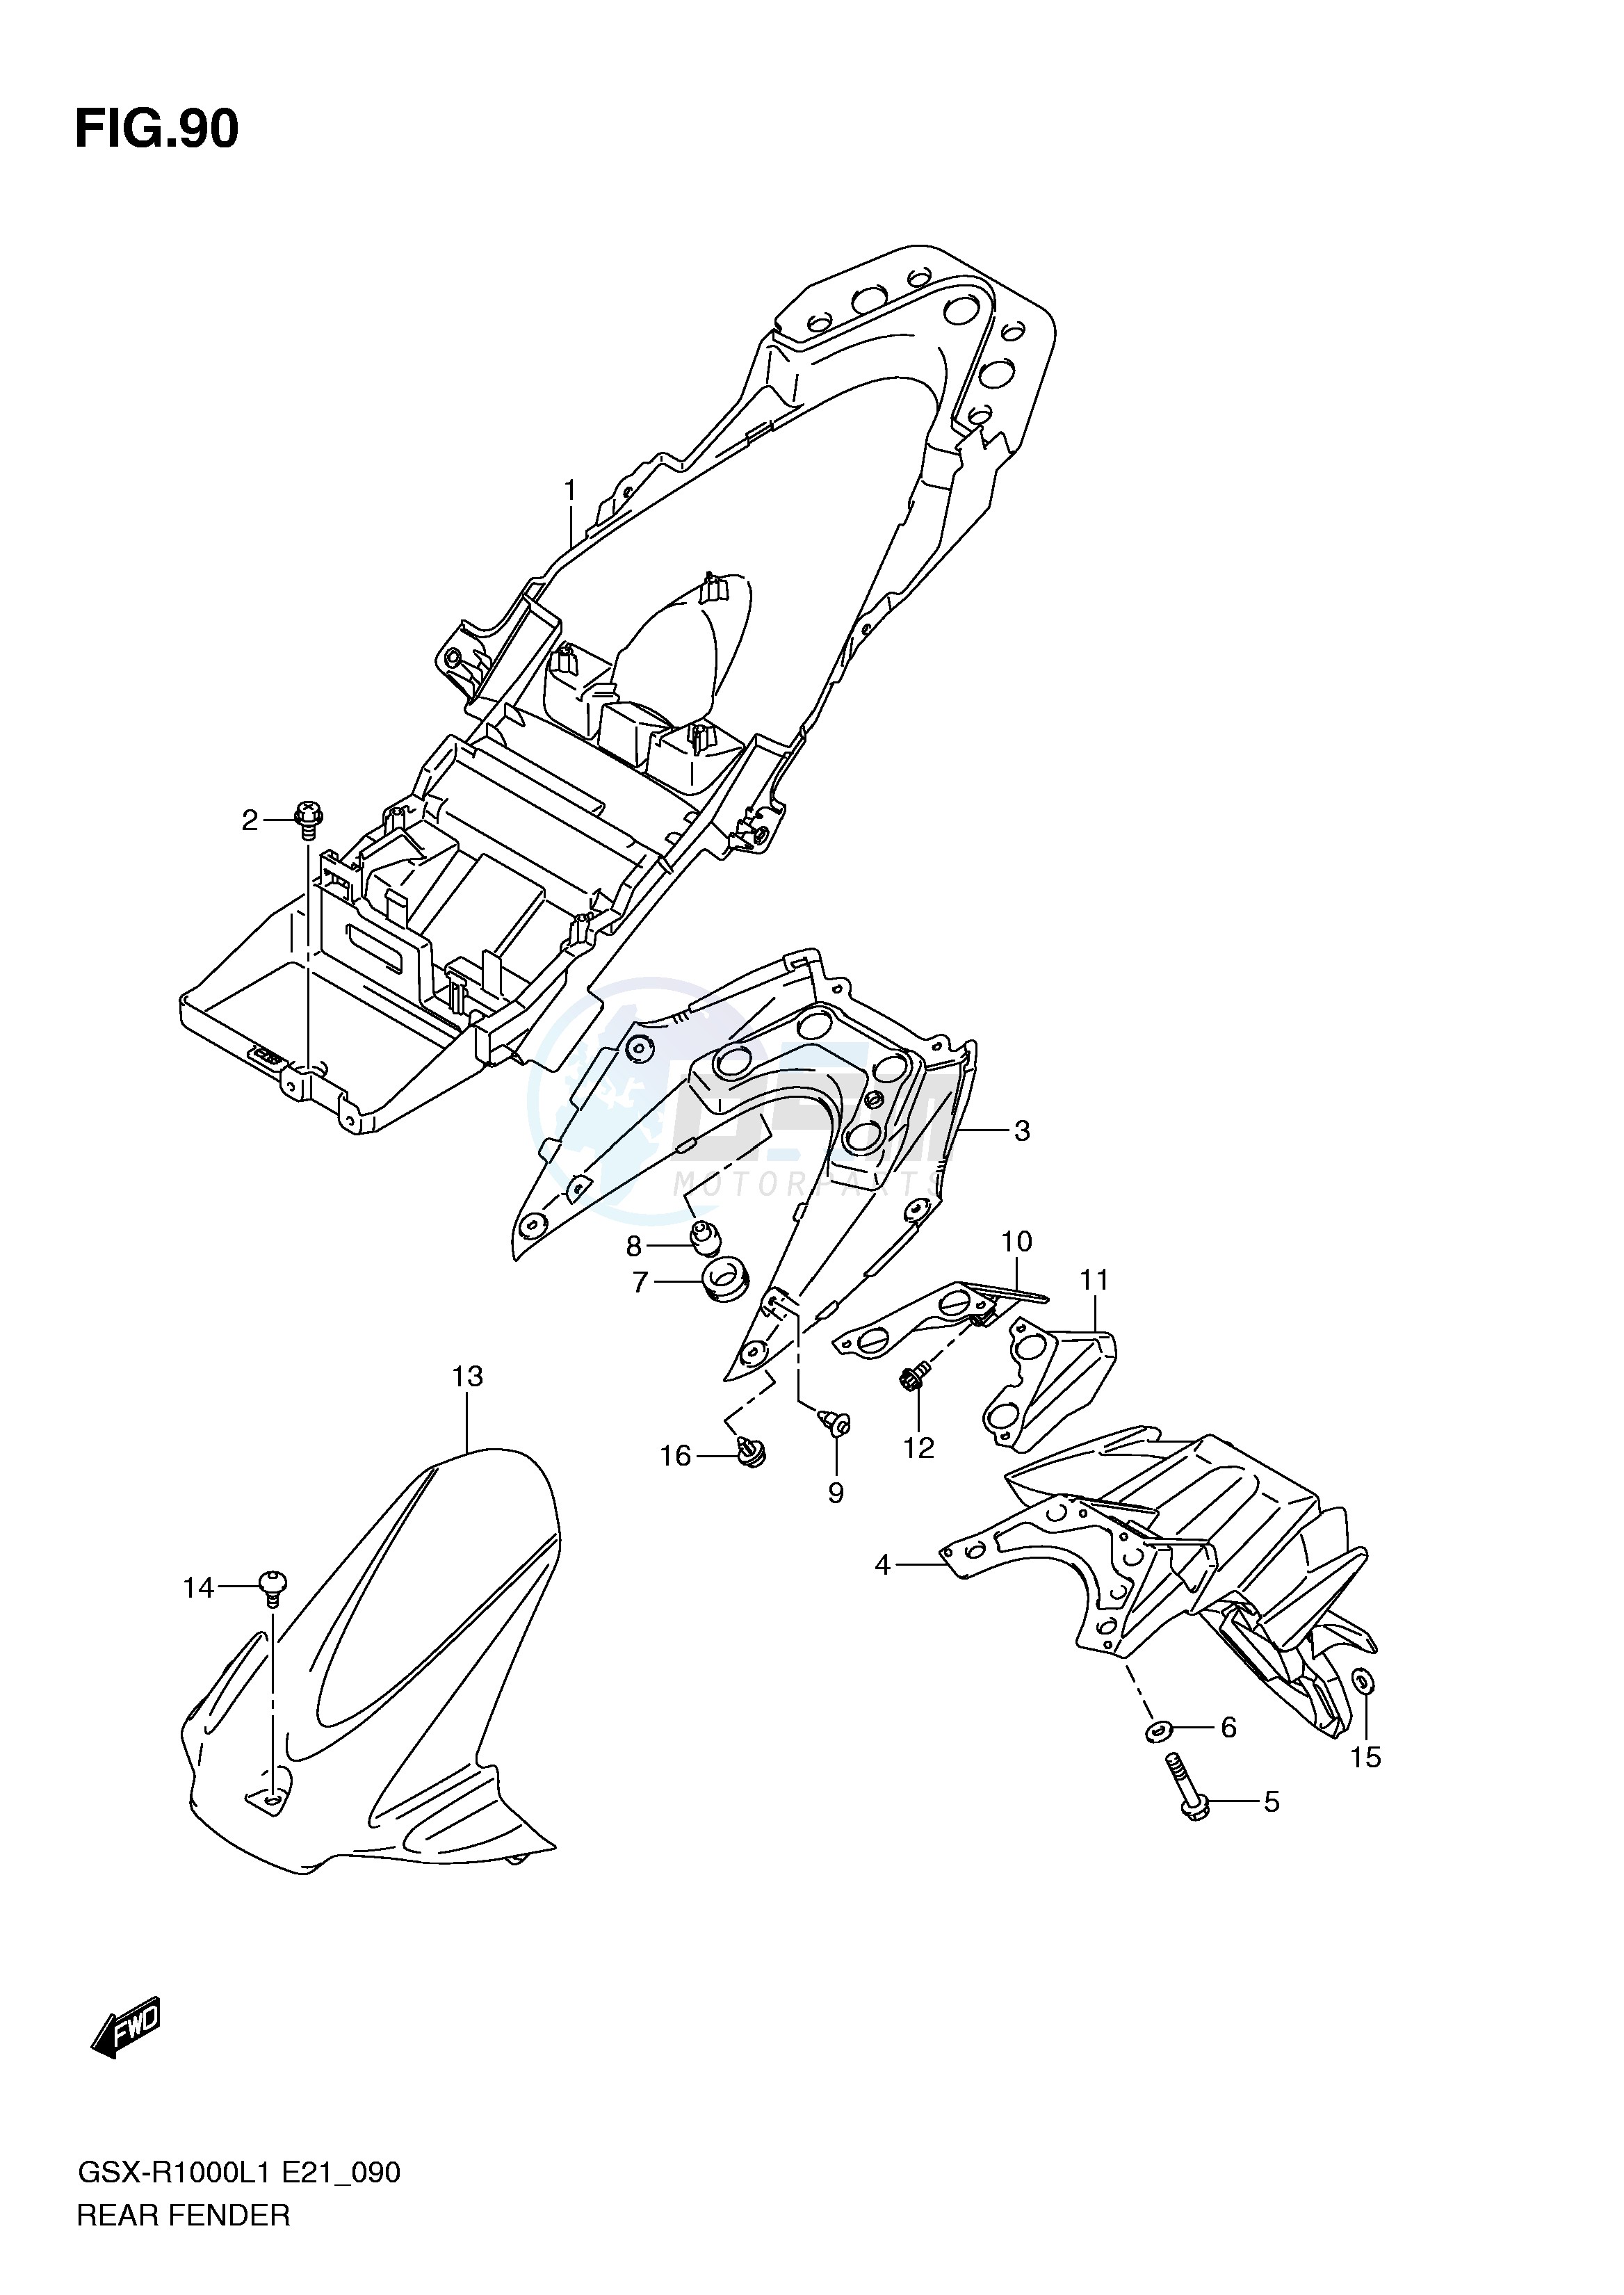 REAR FENDER (GSX-R1000L1 E21) blueprint